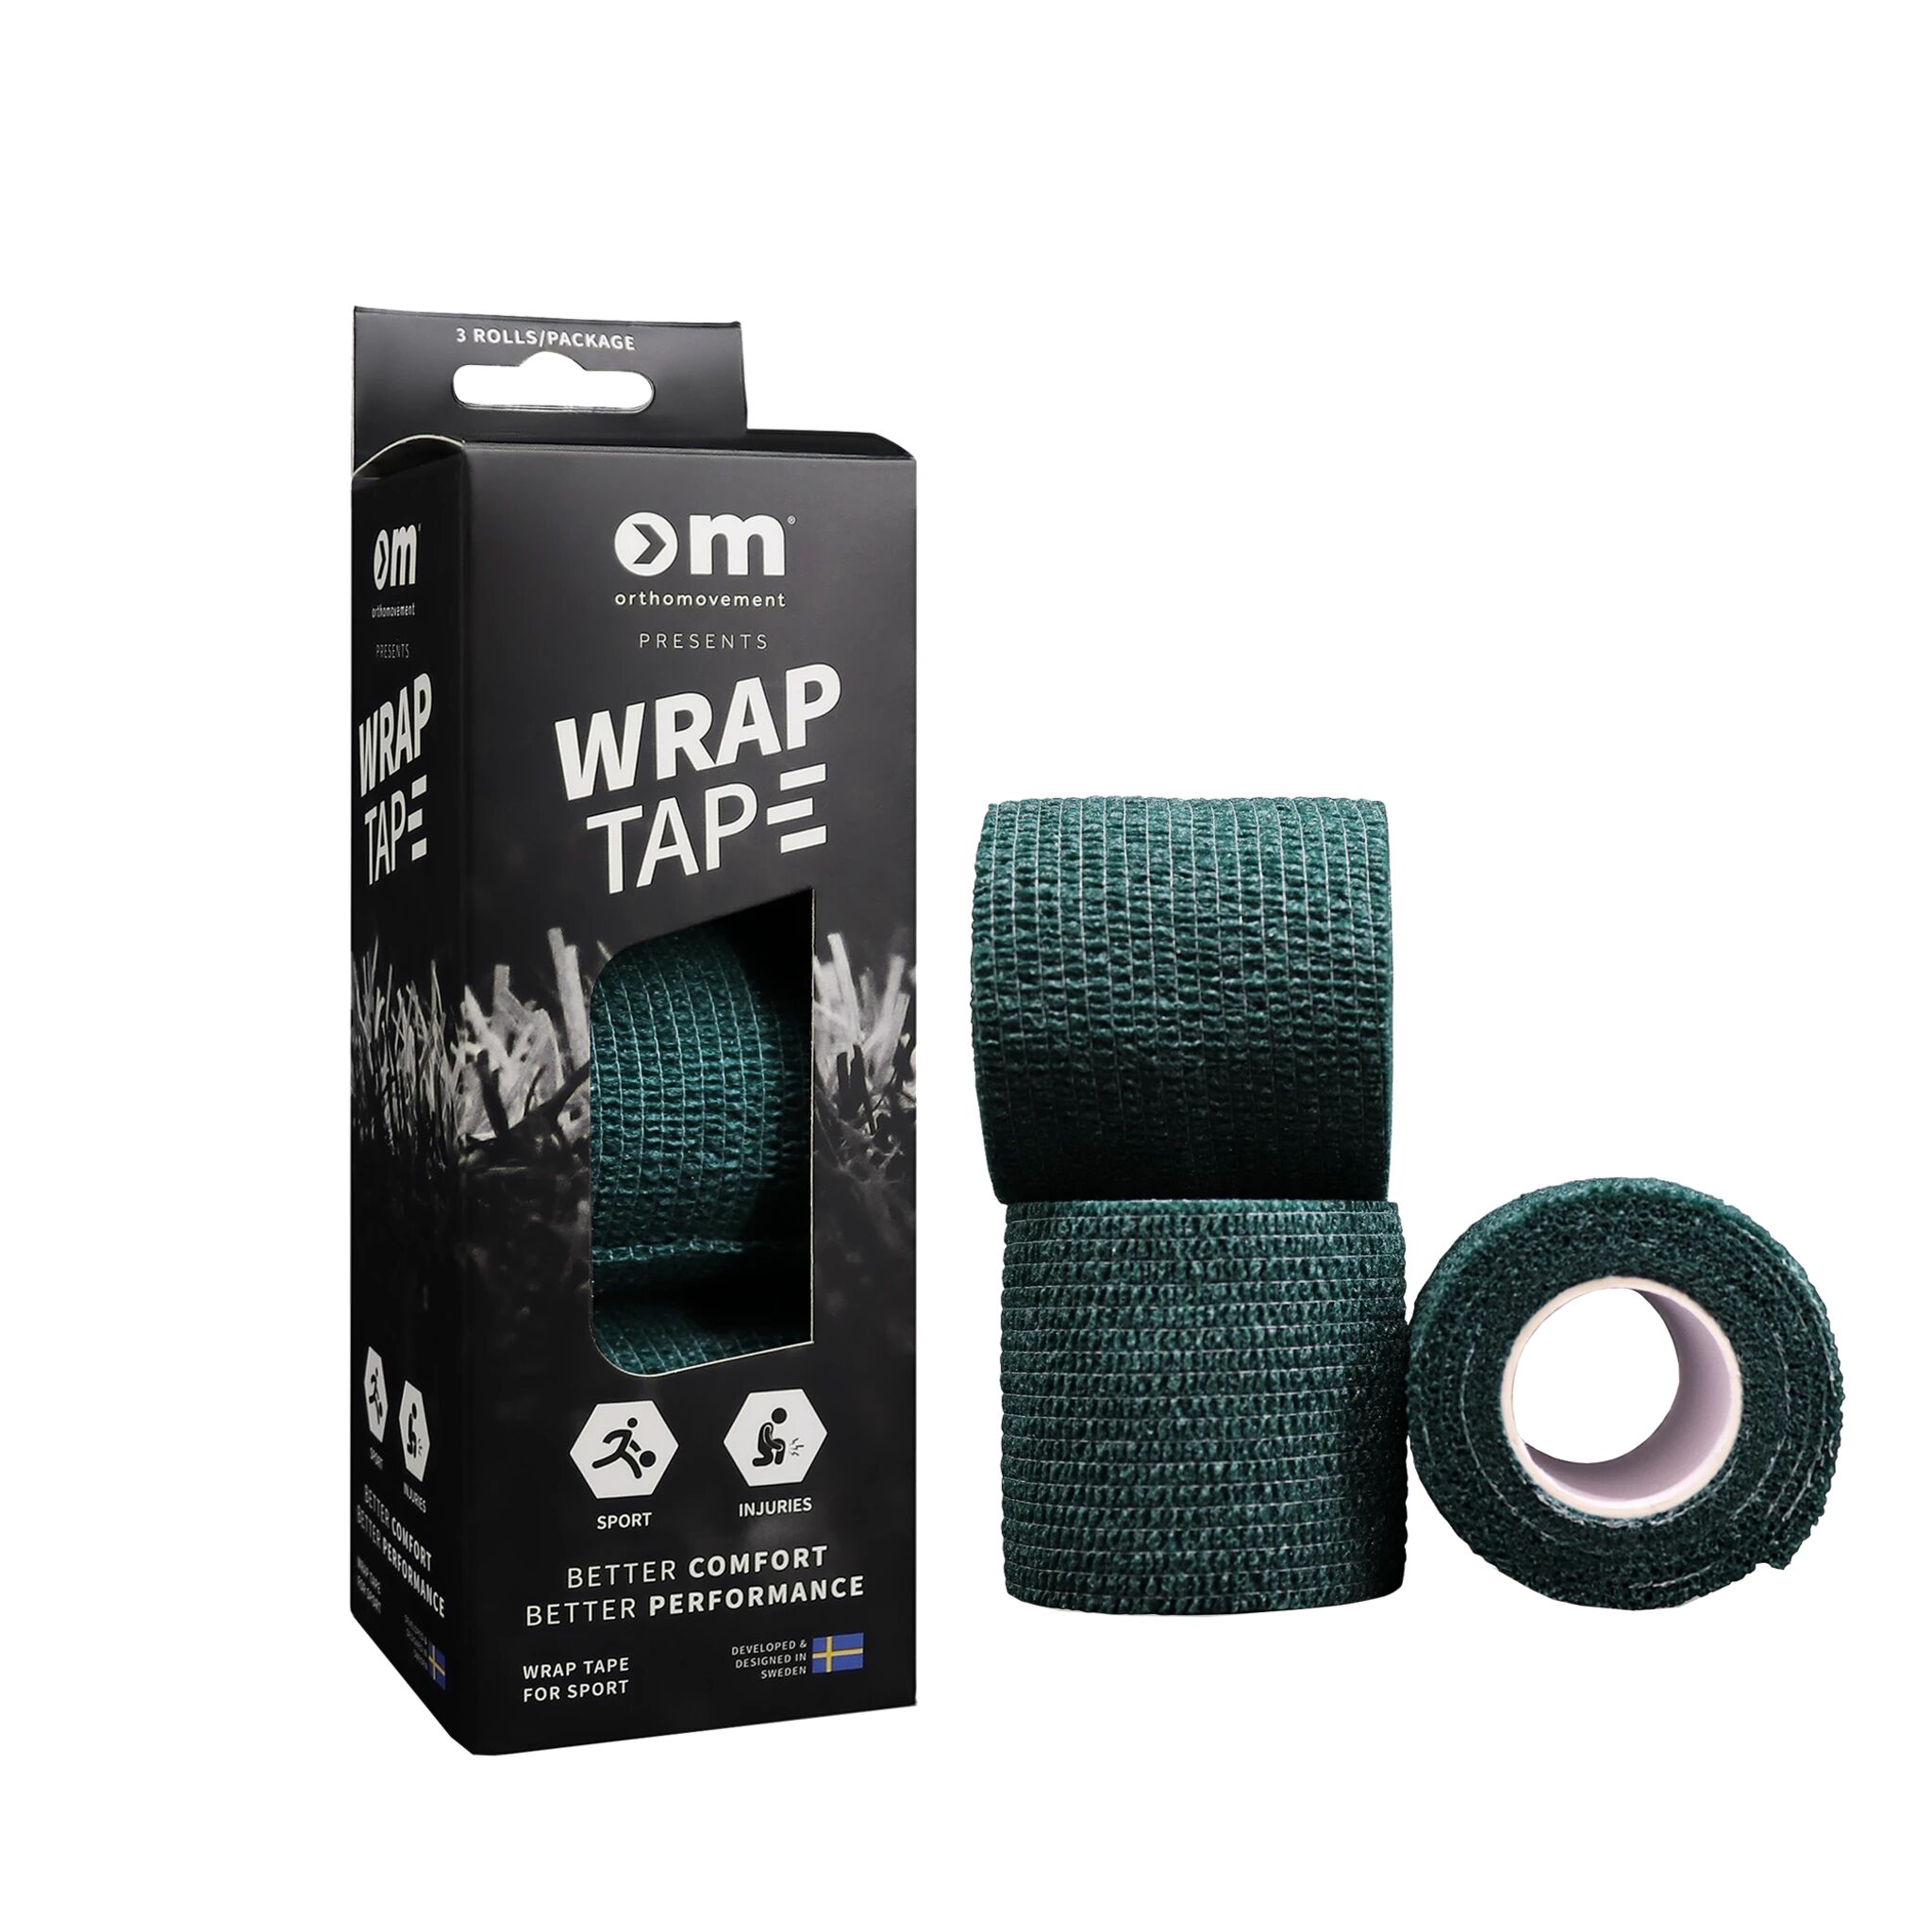 Ortho Movement Wrap Tape 3 Pack, fotballteip One Size Green